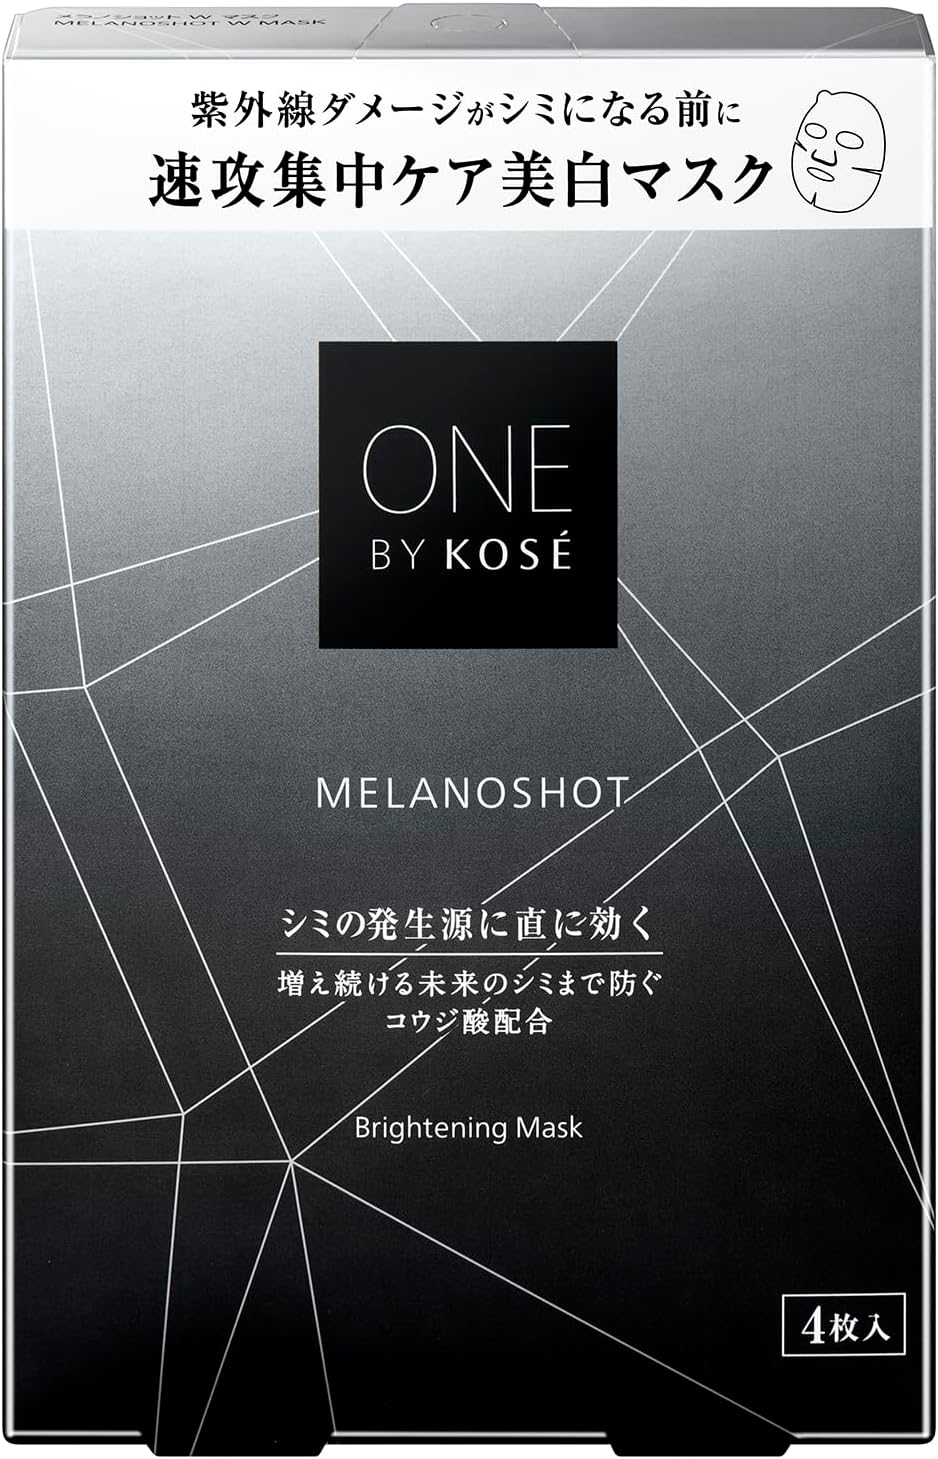 ONE BY KOSÉ(ワンバイコーセー) メラノショット W マスクの商品画像9 